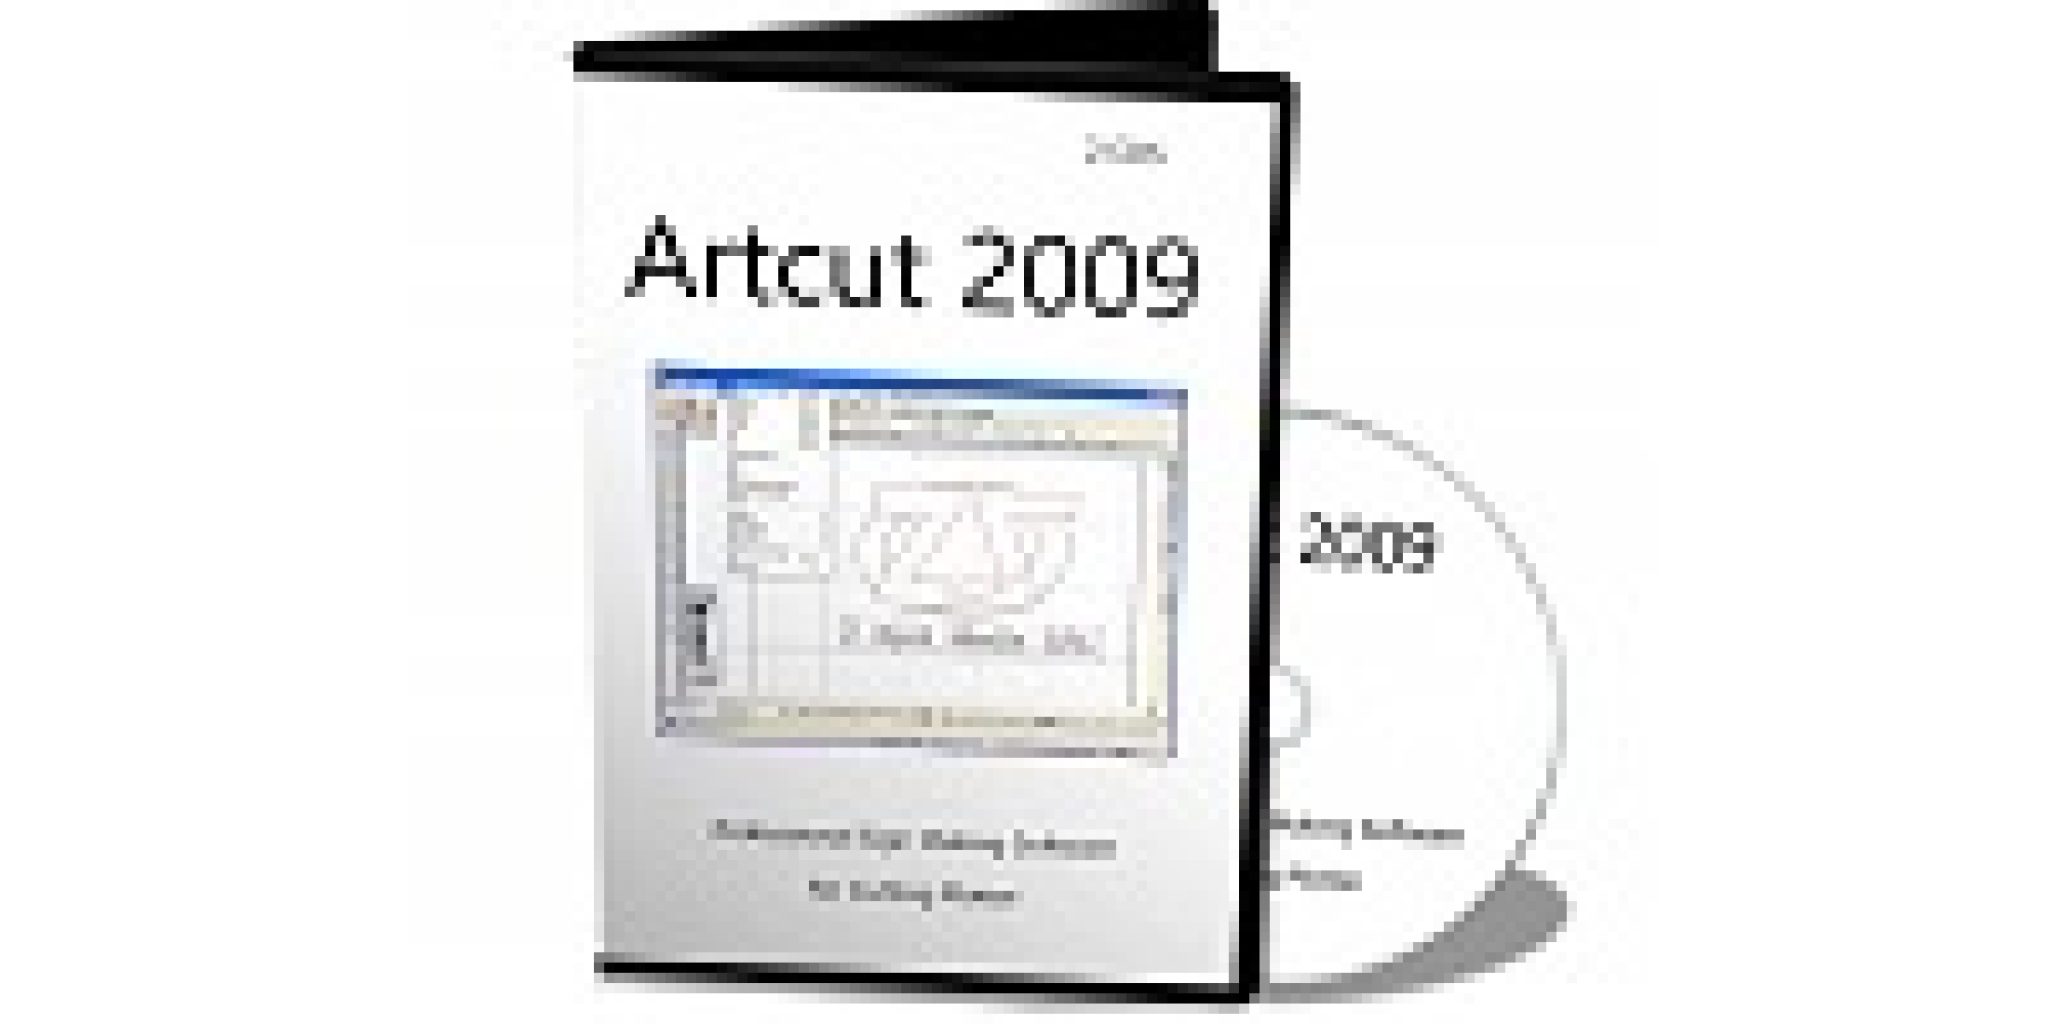 artcut 2010 software